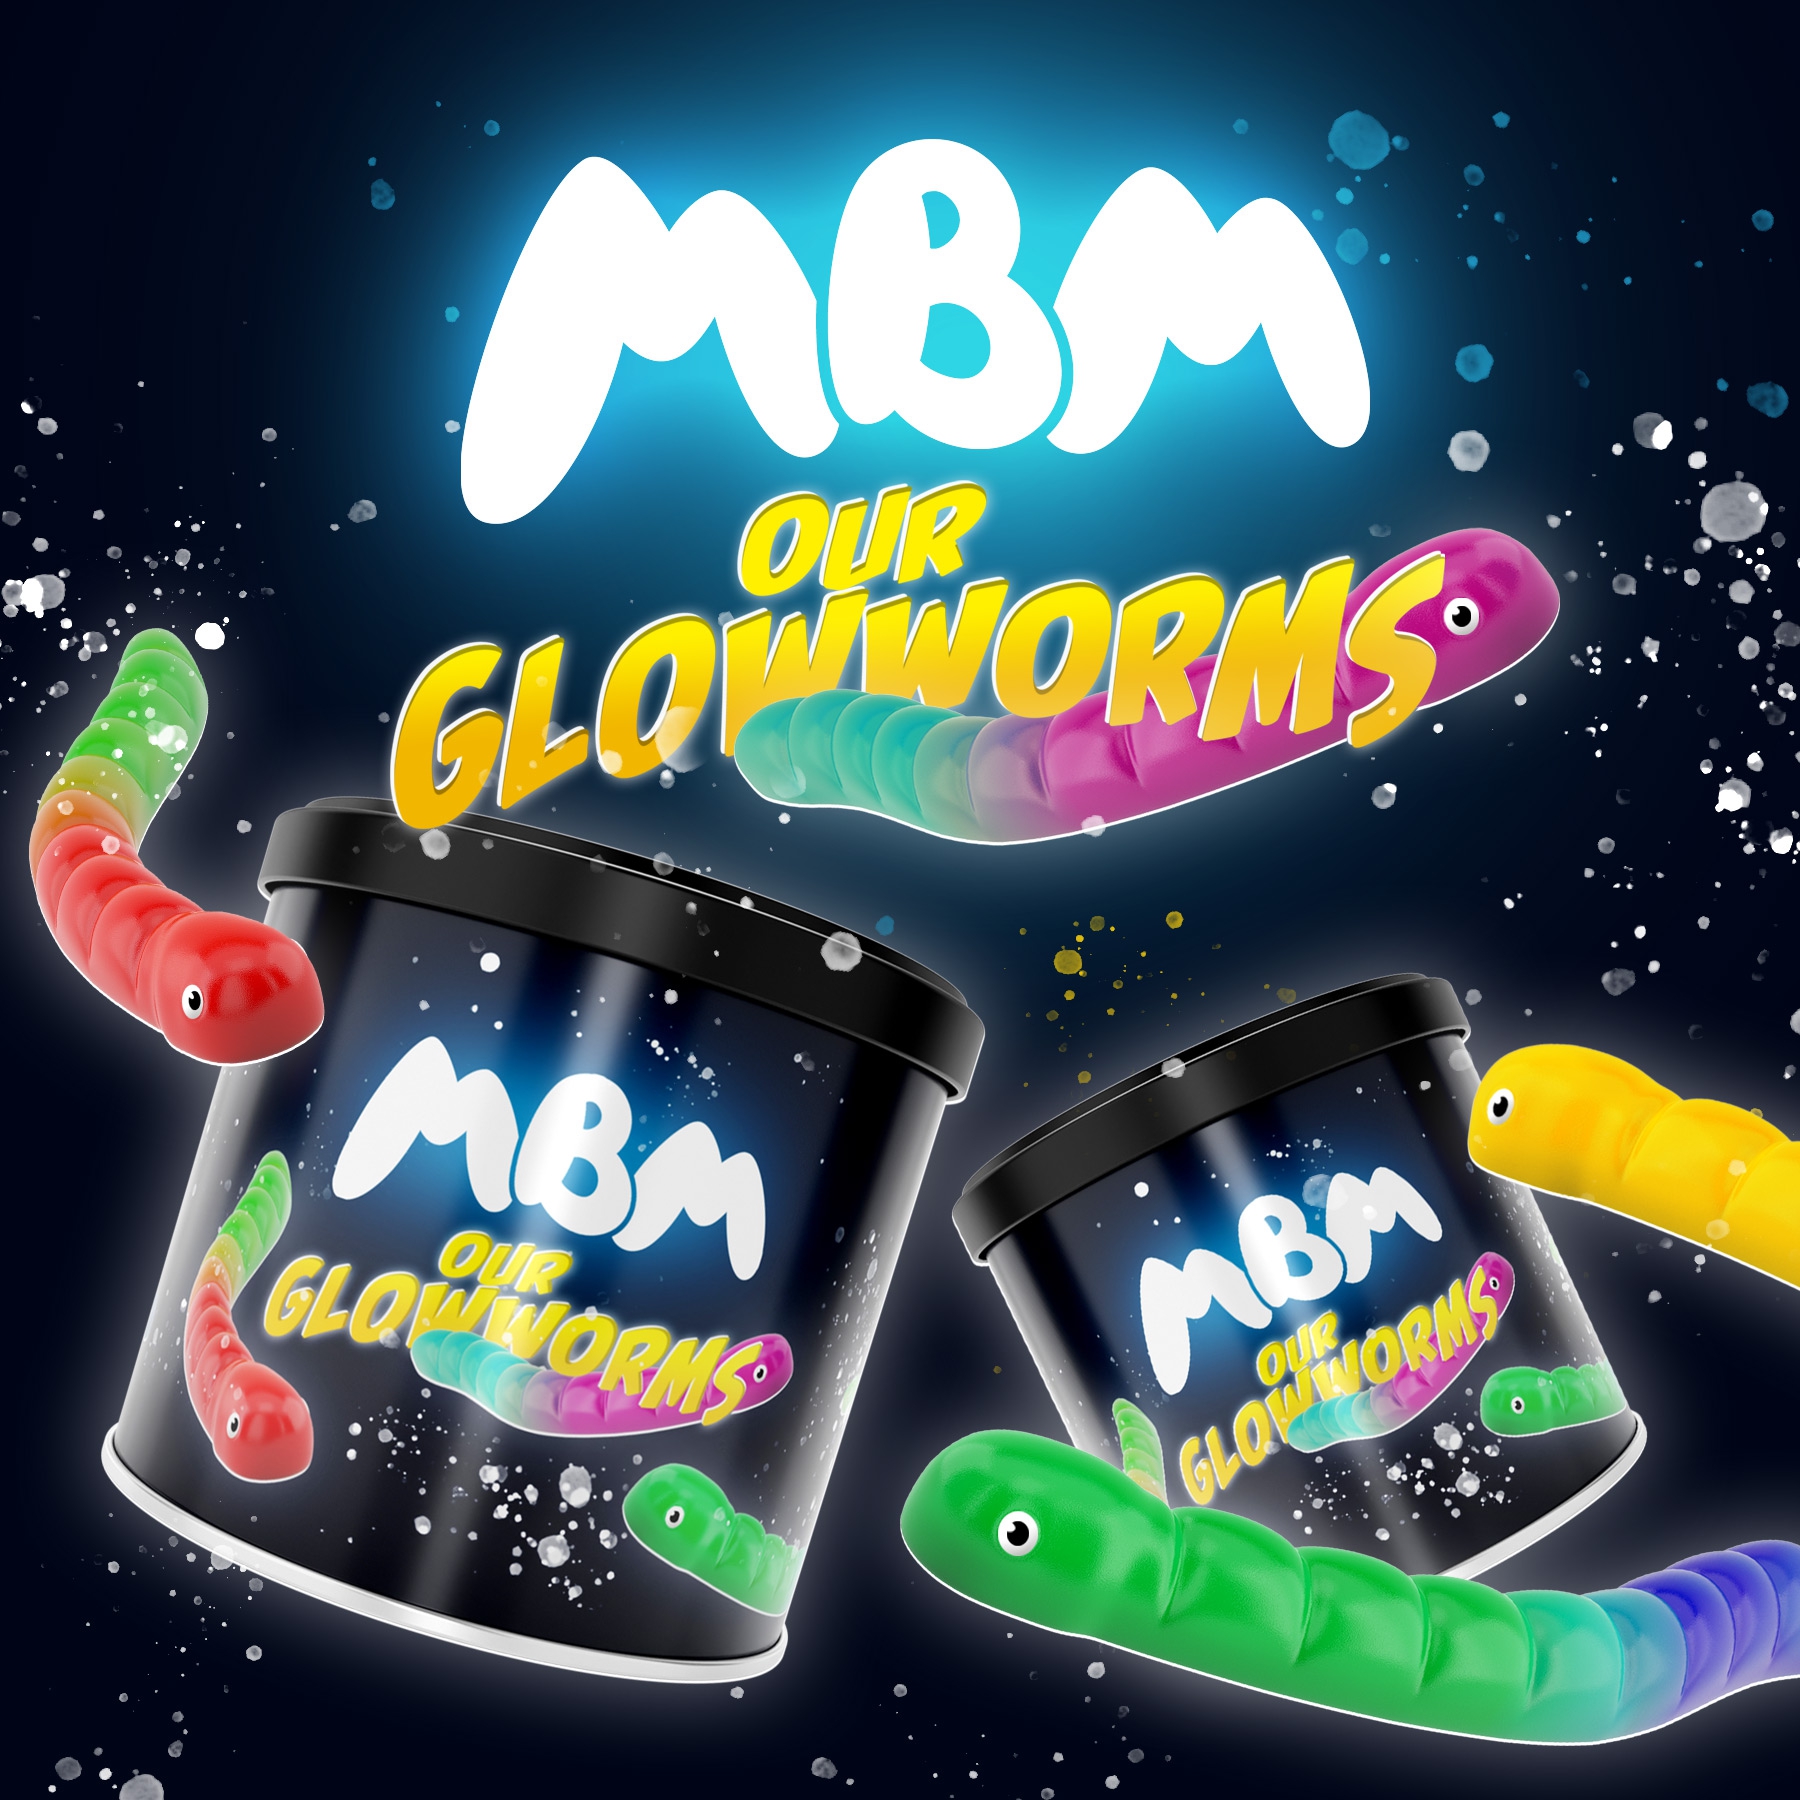 MBM Tabak Base - Our Glowworms 70g